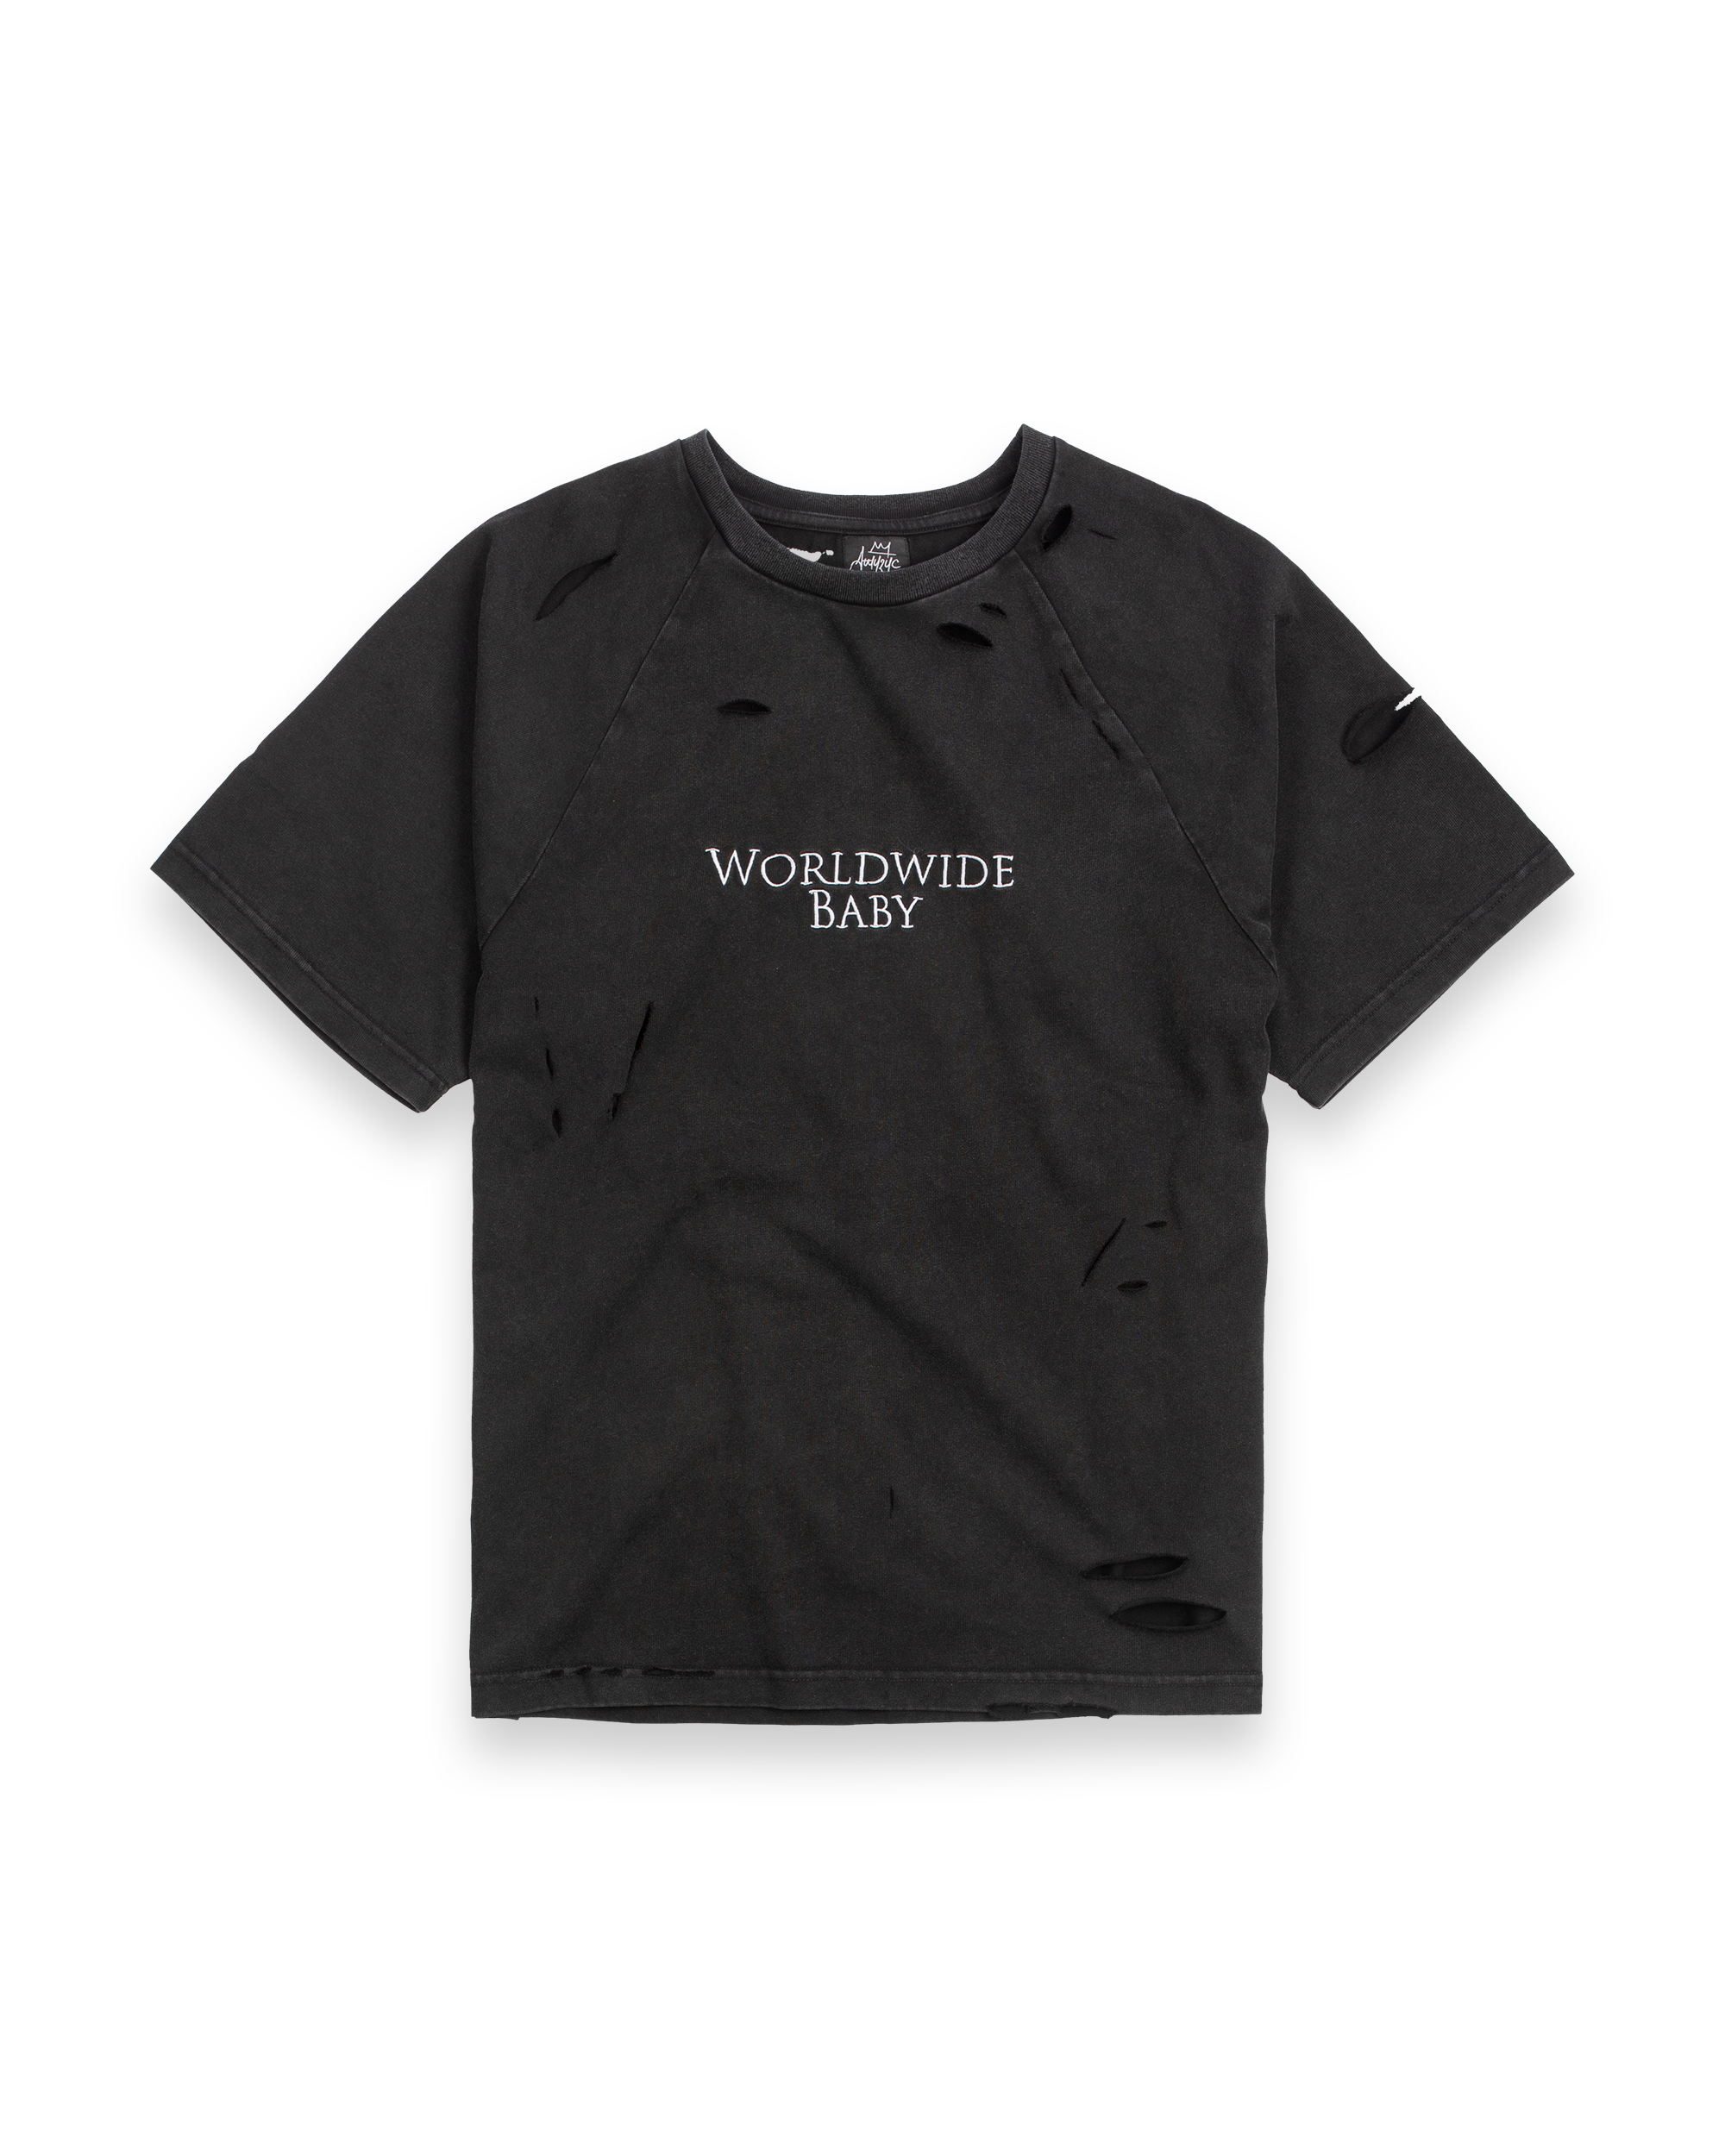 'WW Baby' t-shirt, black